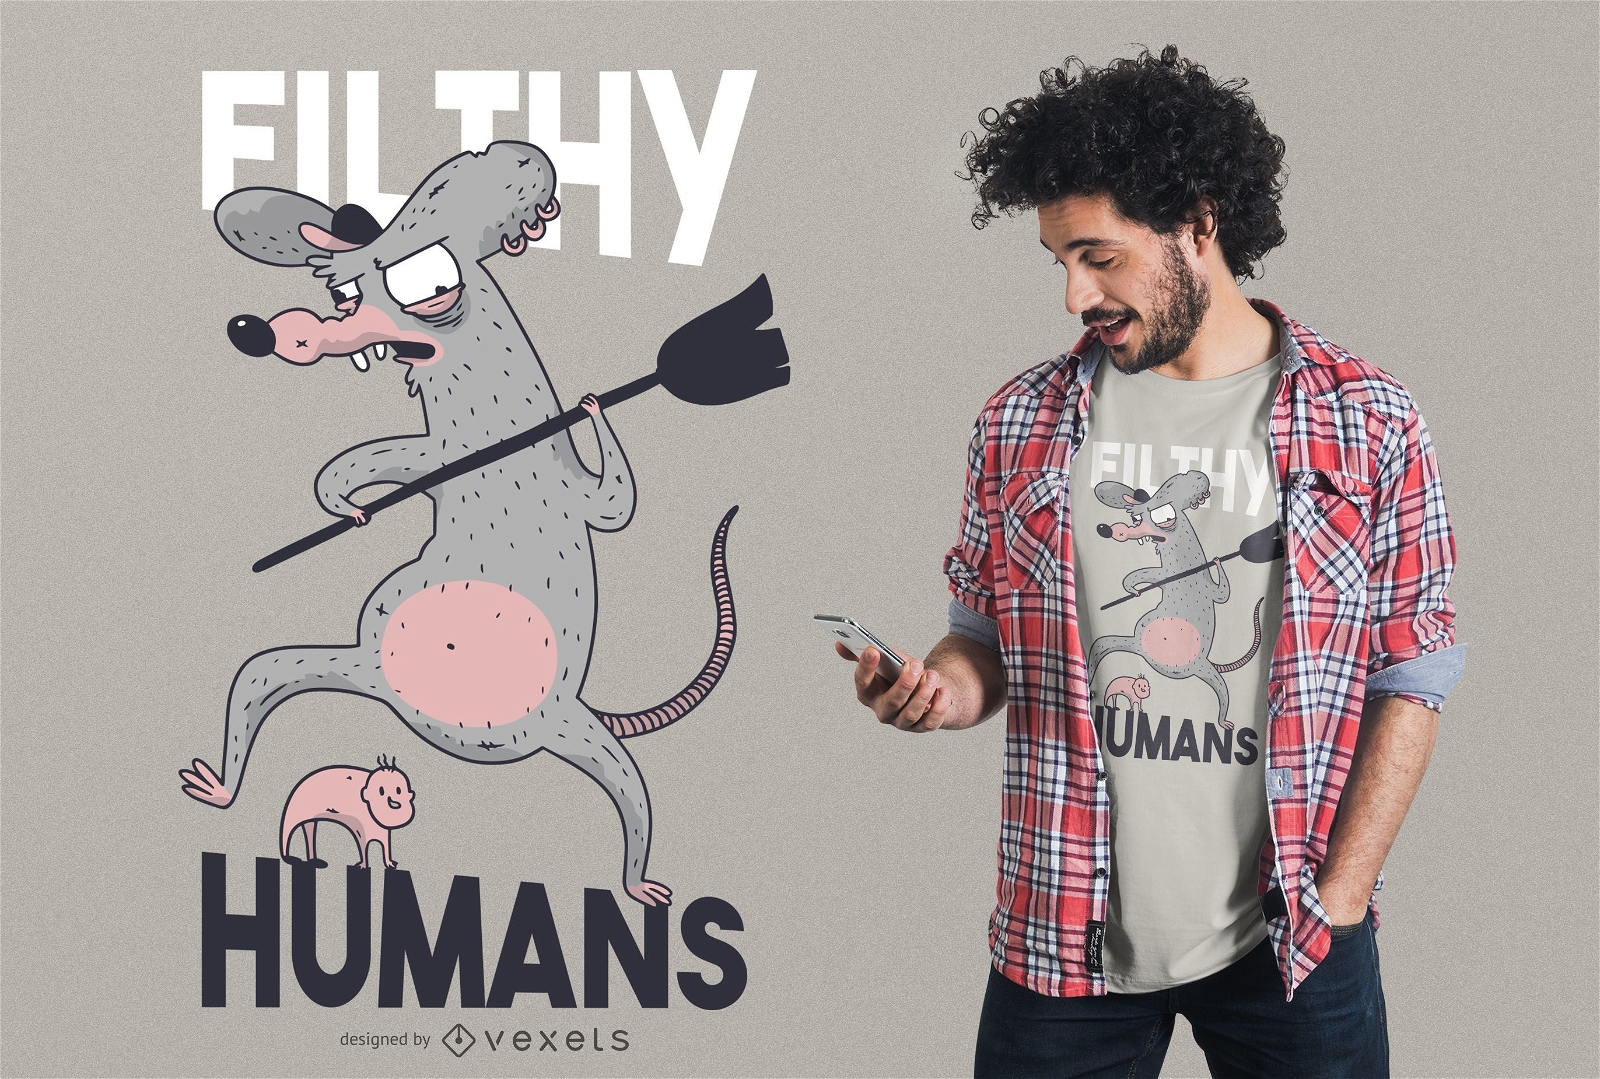 Filthy humans t-shirt design